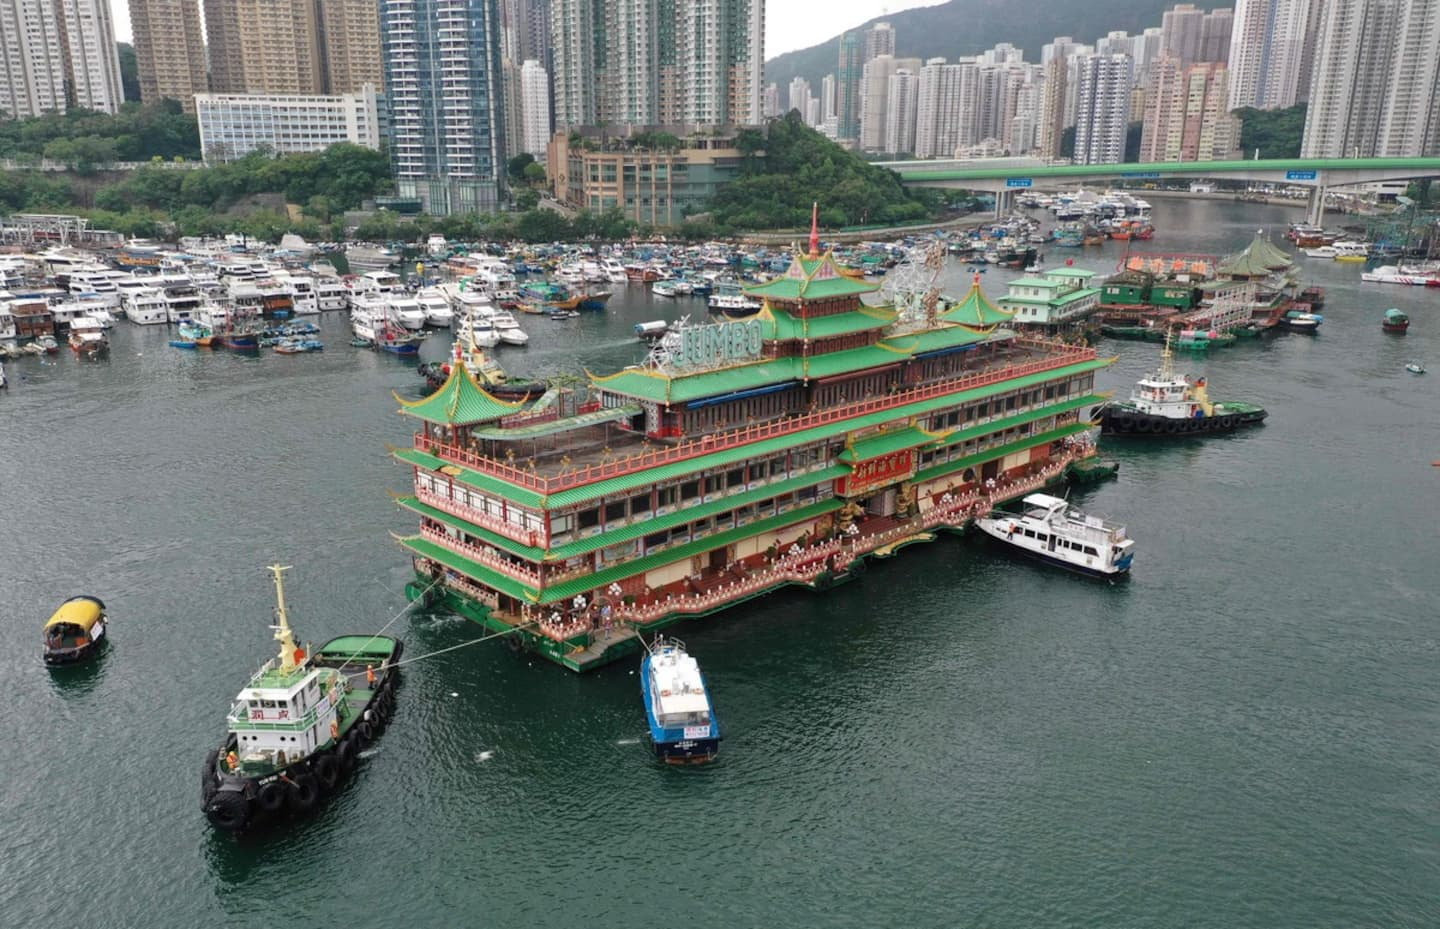 Mystery around Hong Kong's floating restaurant deepens